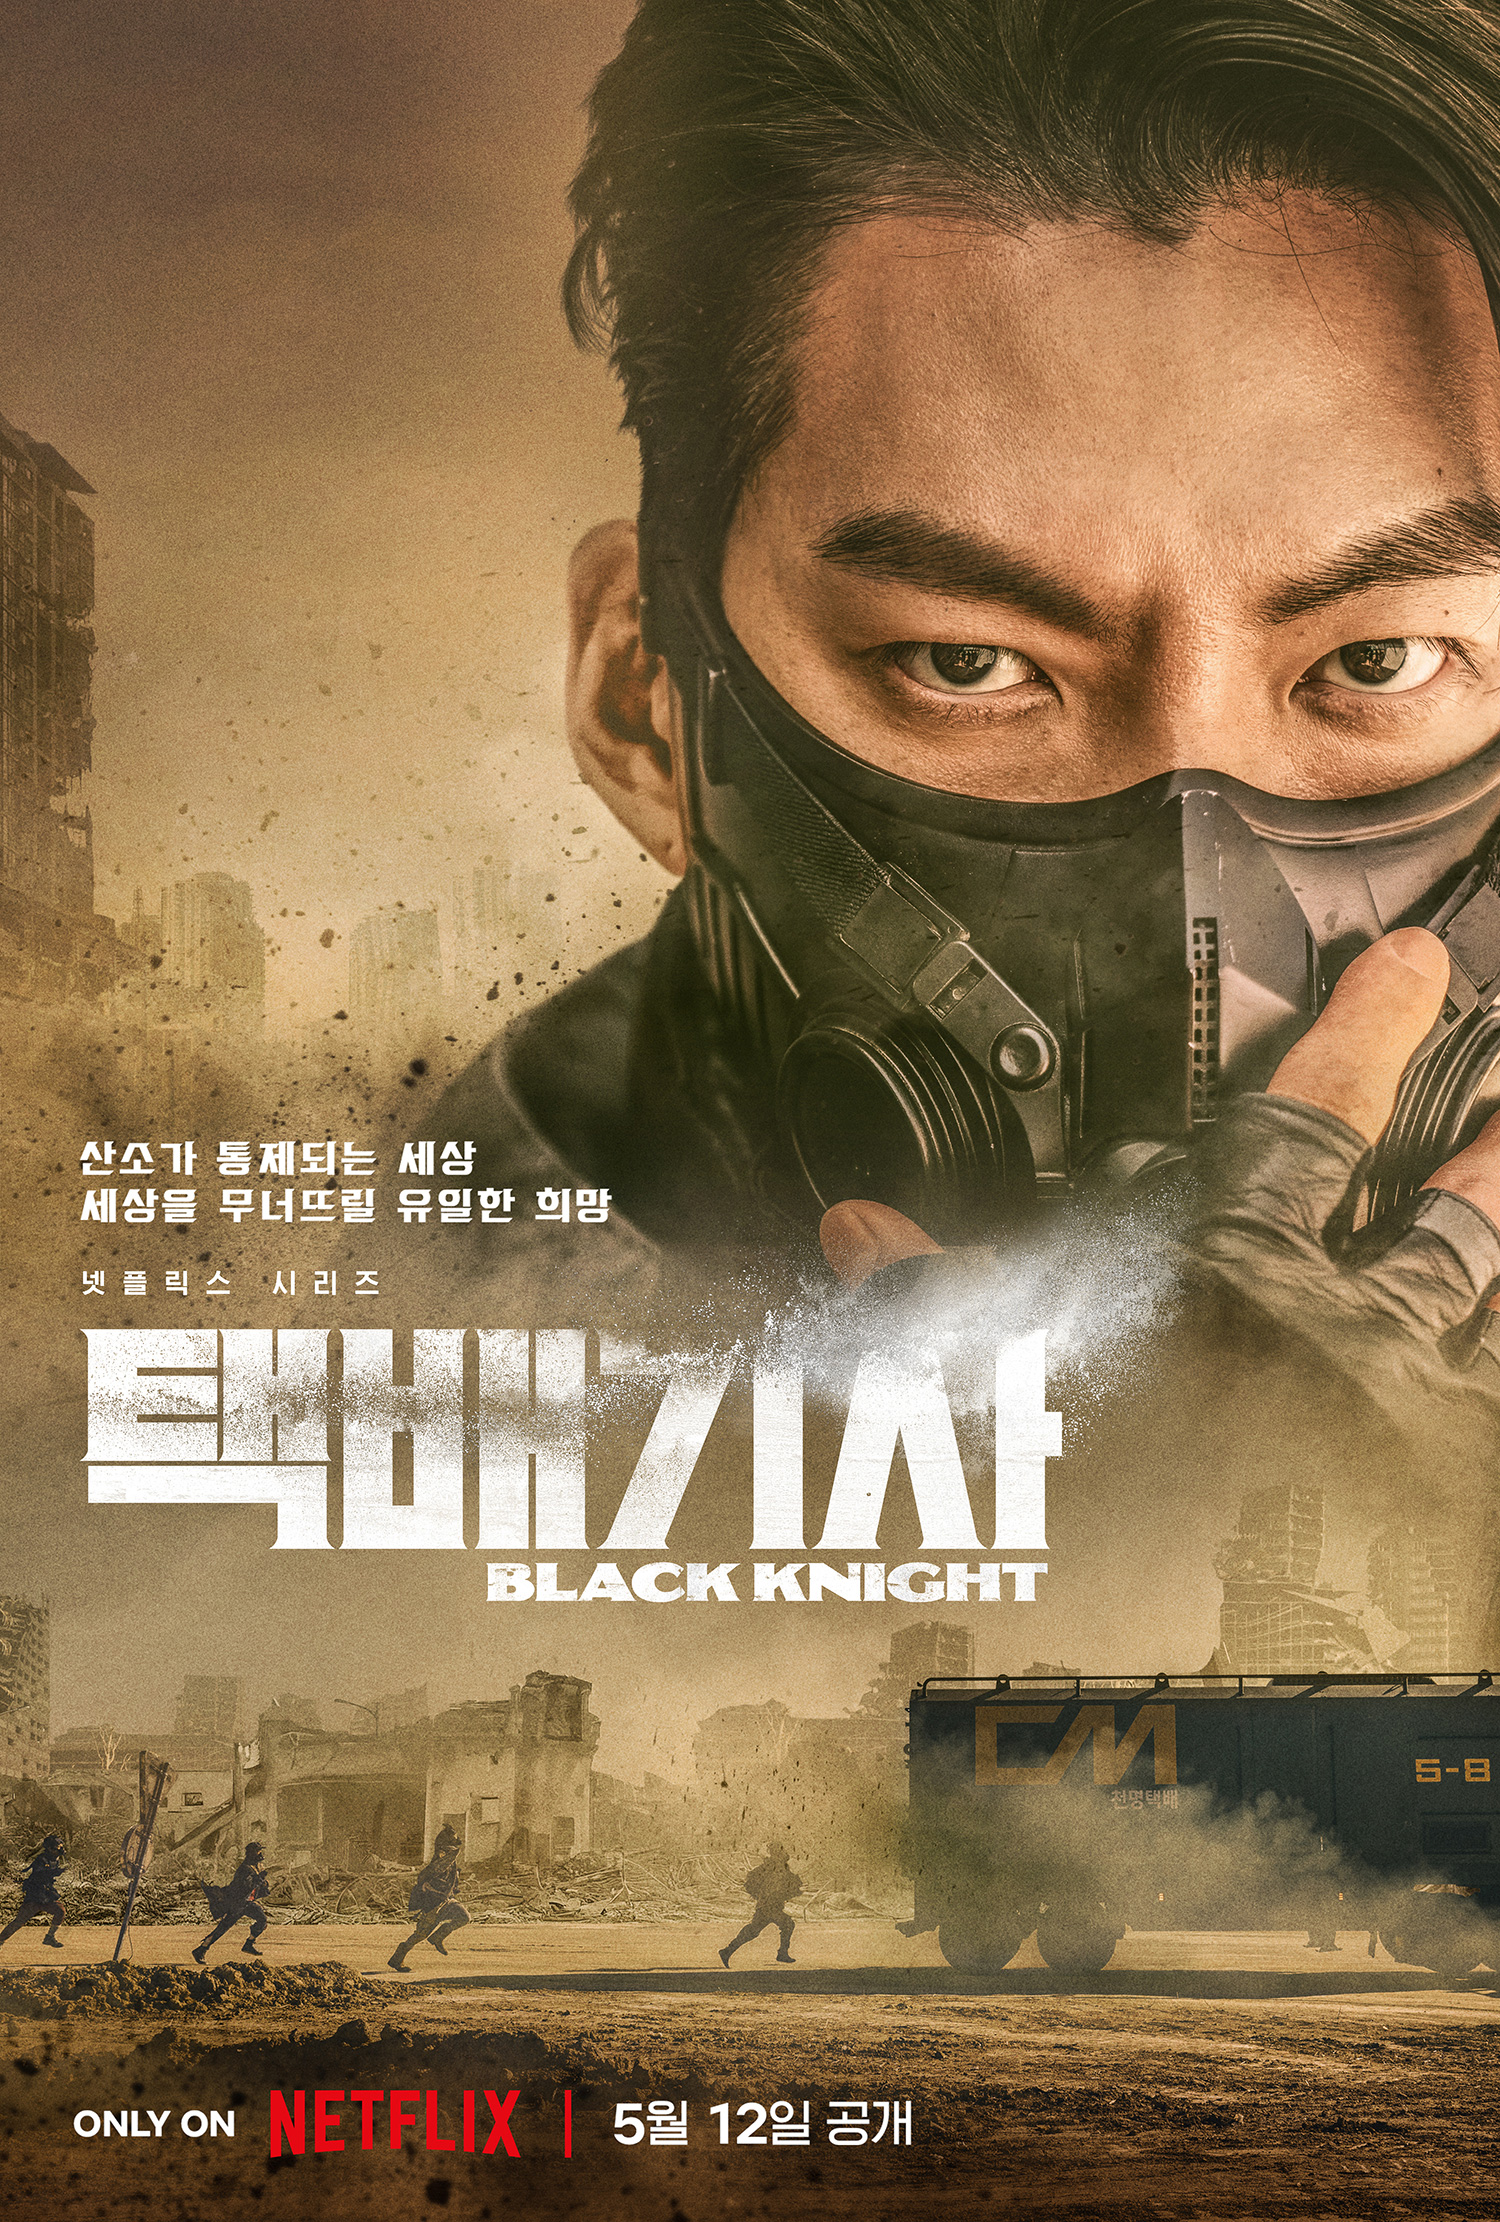 Teaser trailer & poster for Netflix drama “Black Knight” AsianWiki Blog